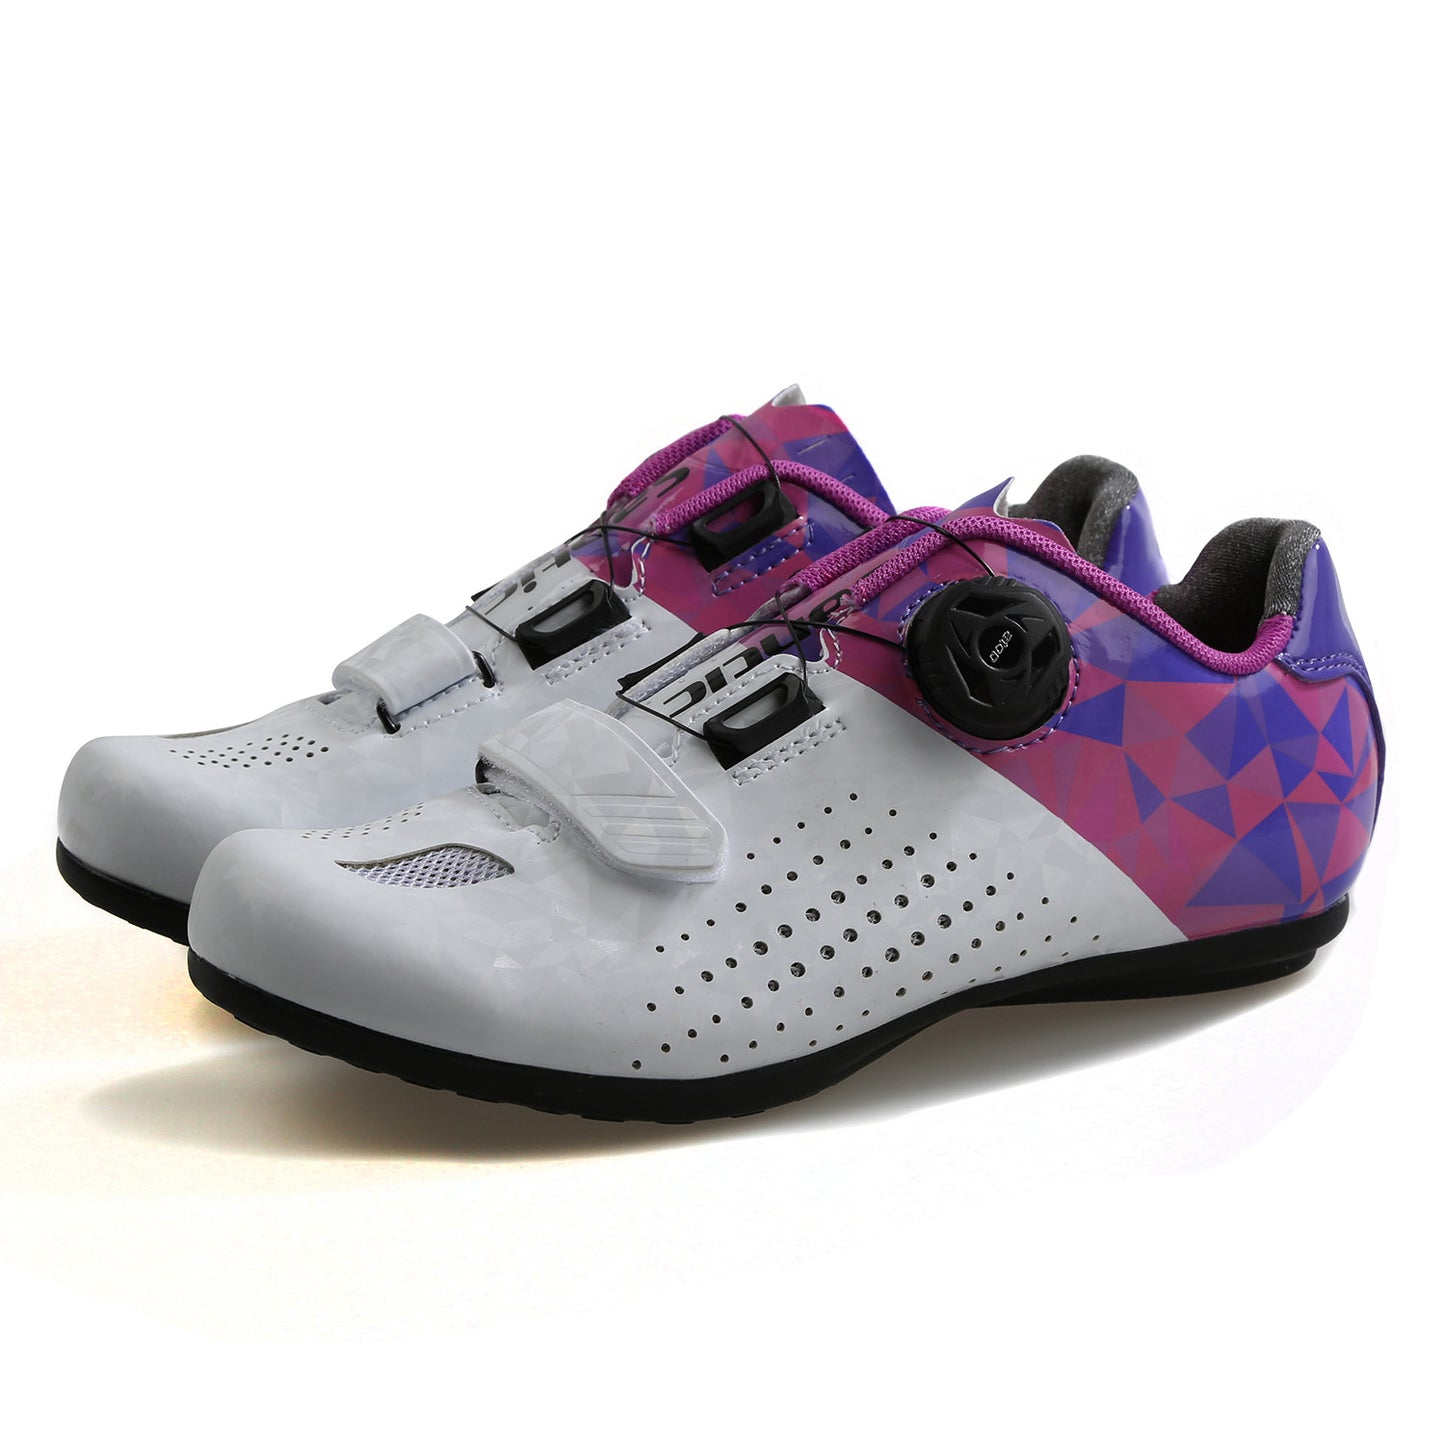 Santic Athena Purple Women Road MTB Cycling Shoes Bike Cleats not Compatible